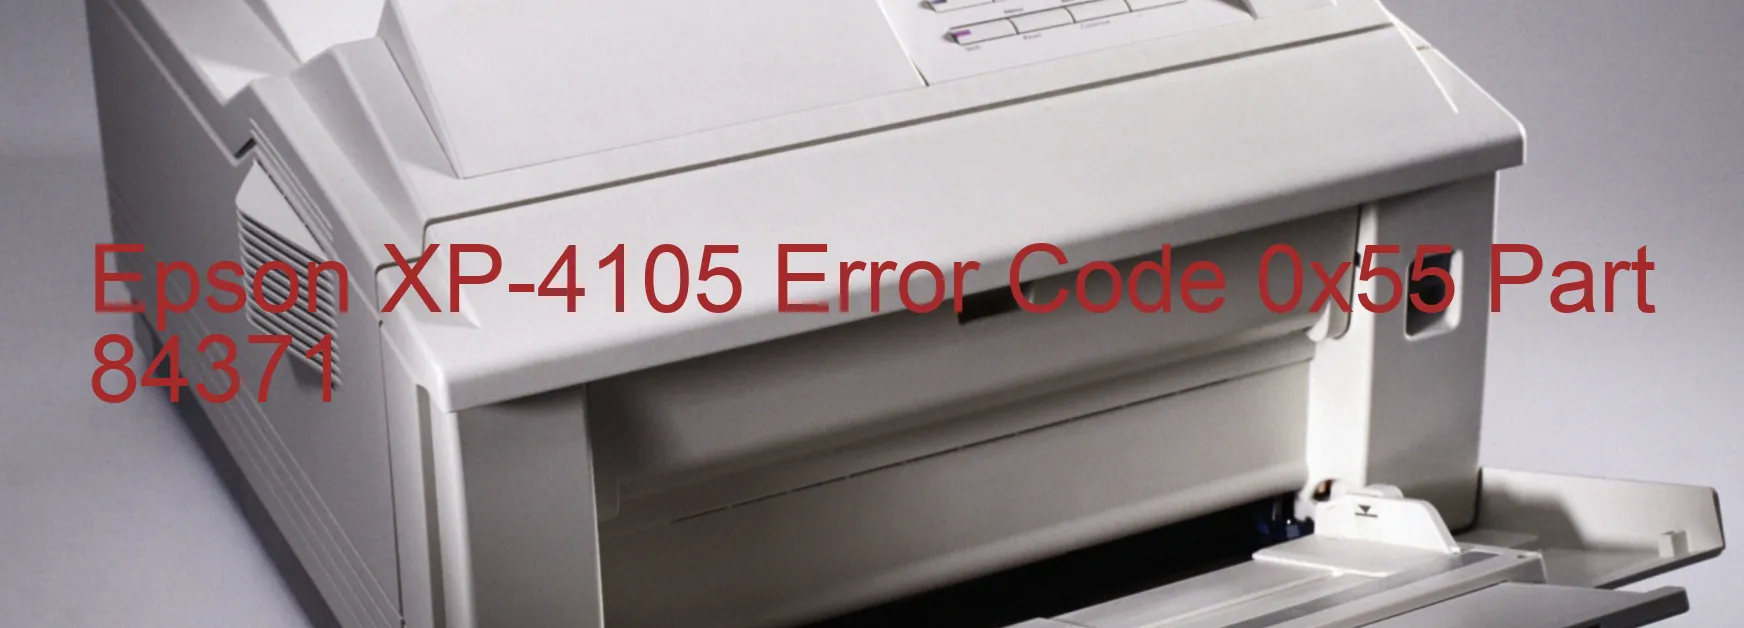 Epson XP-4105 Error Code 0x55 Part 84371